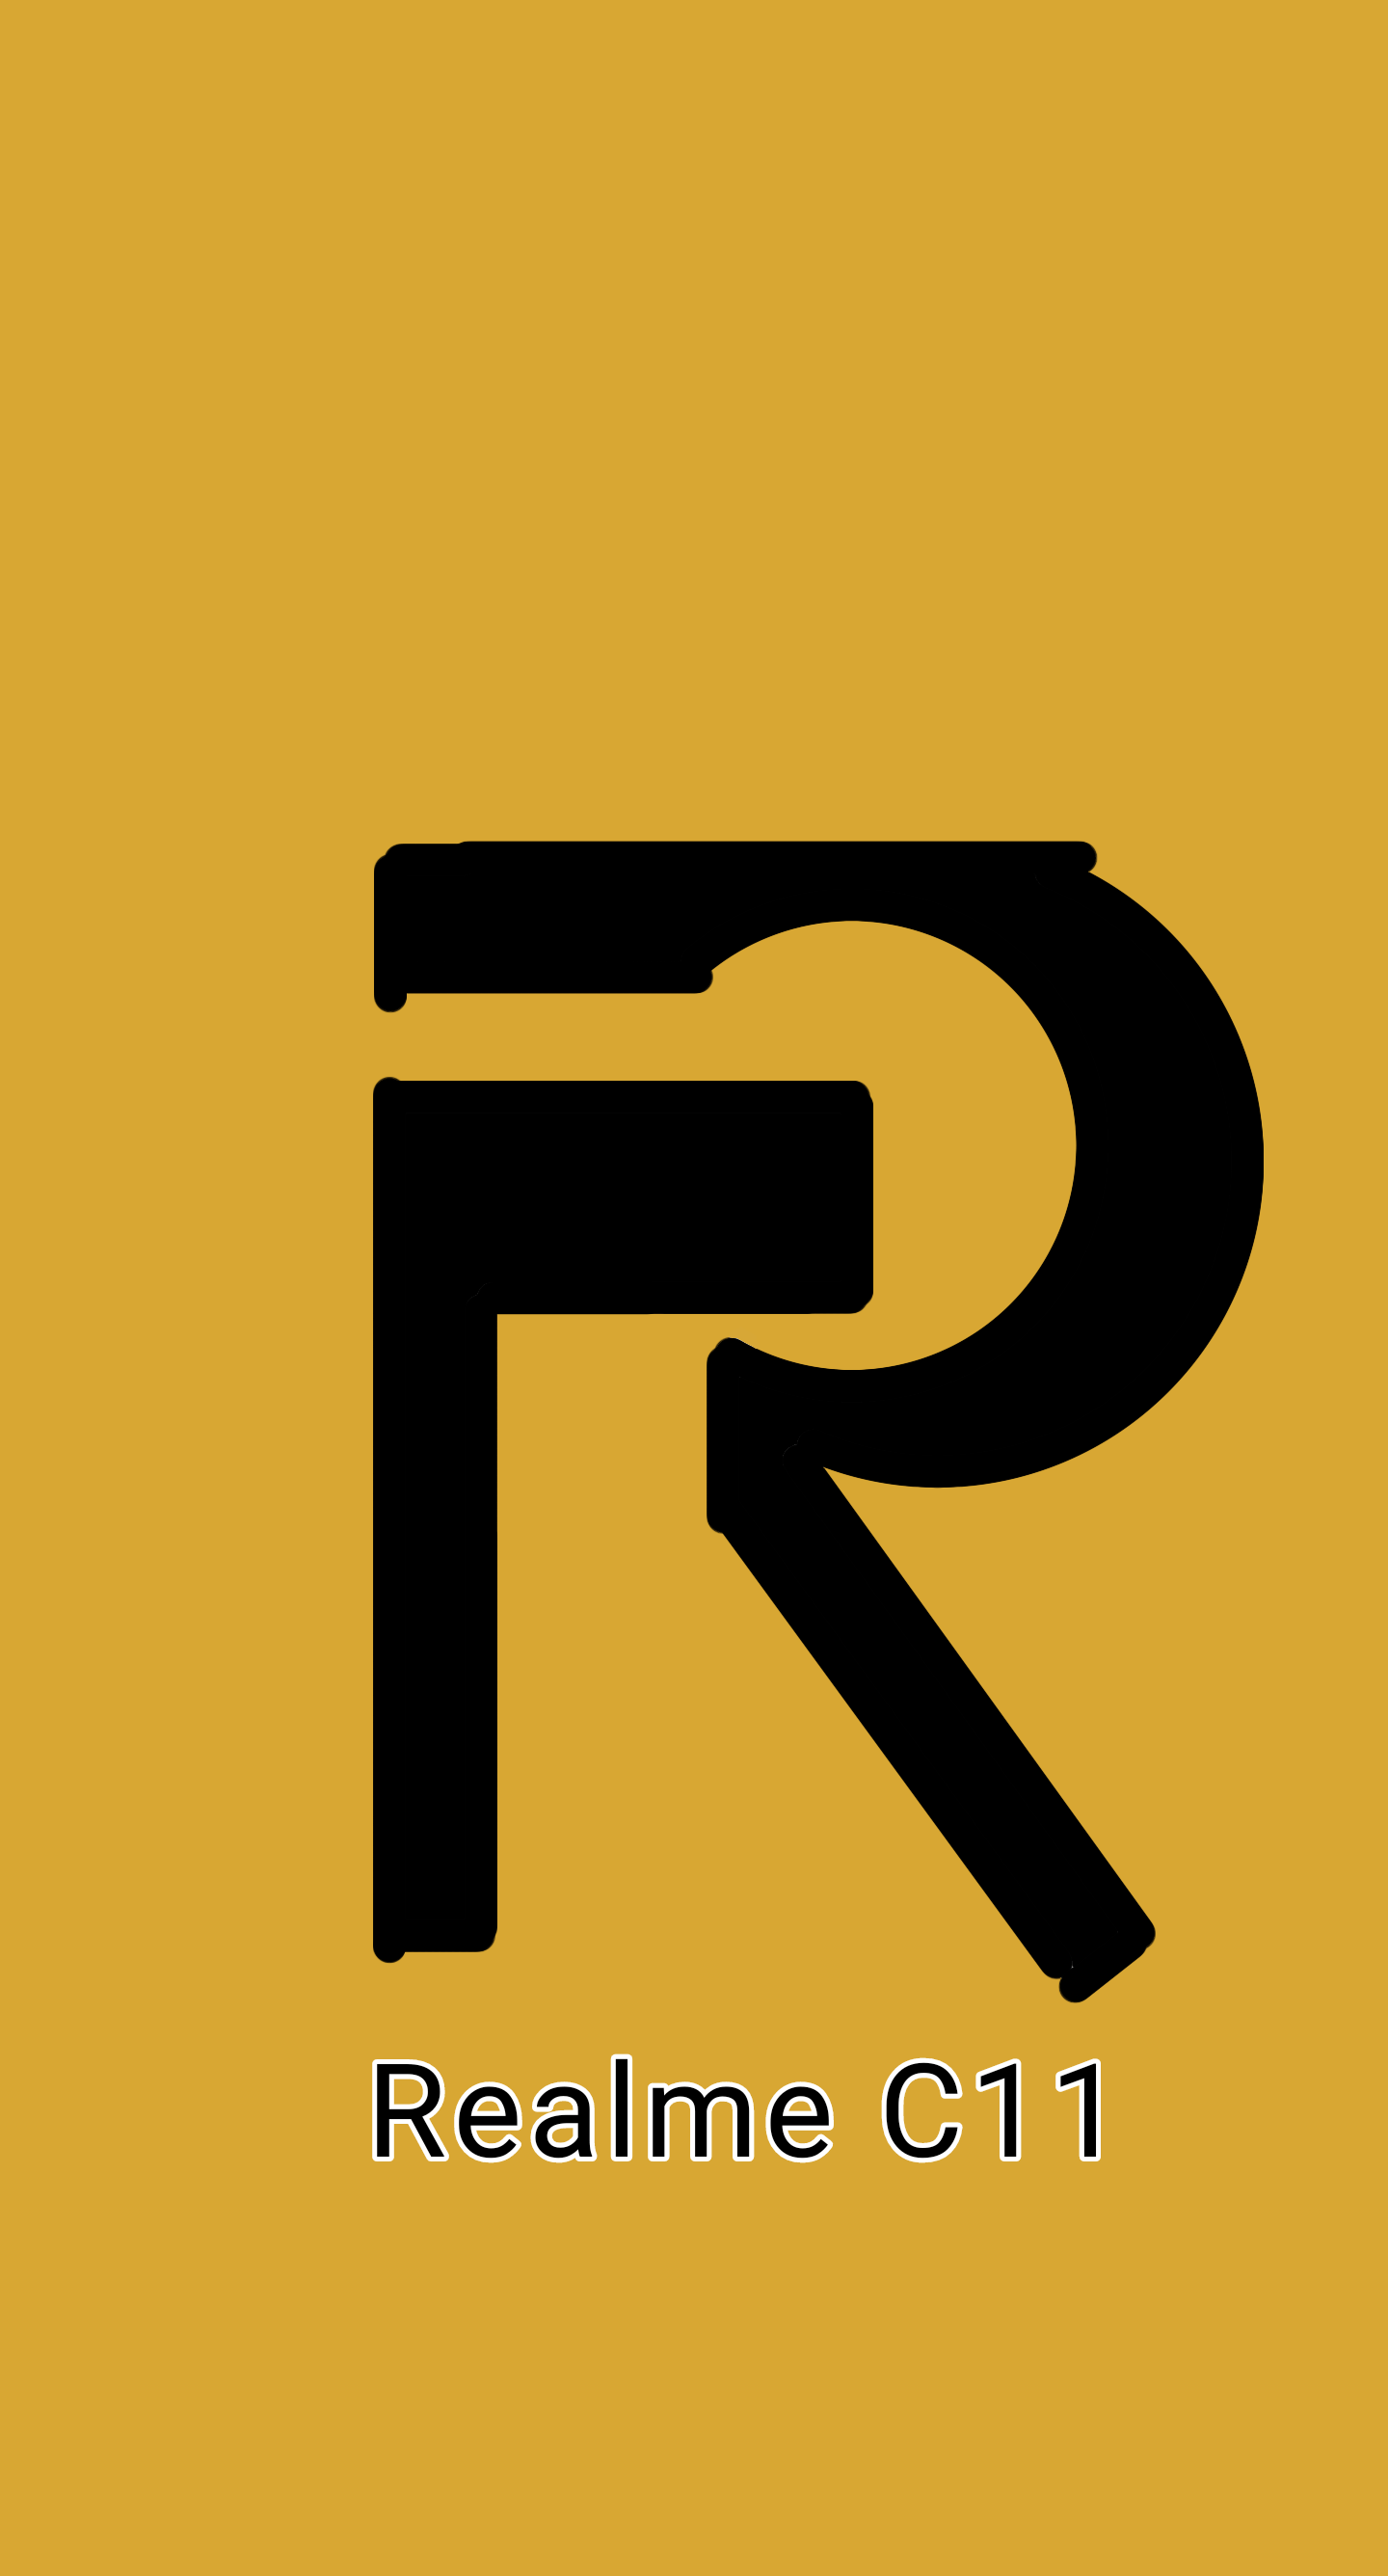 realme Logo - Realme C11 logo (My drawing) : r ...